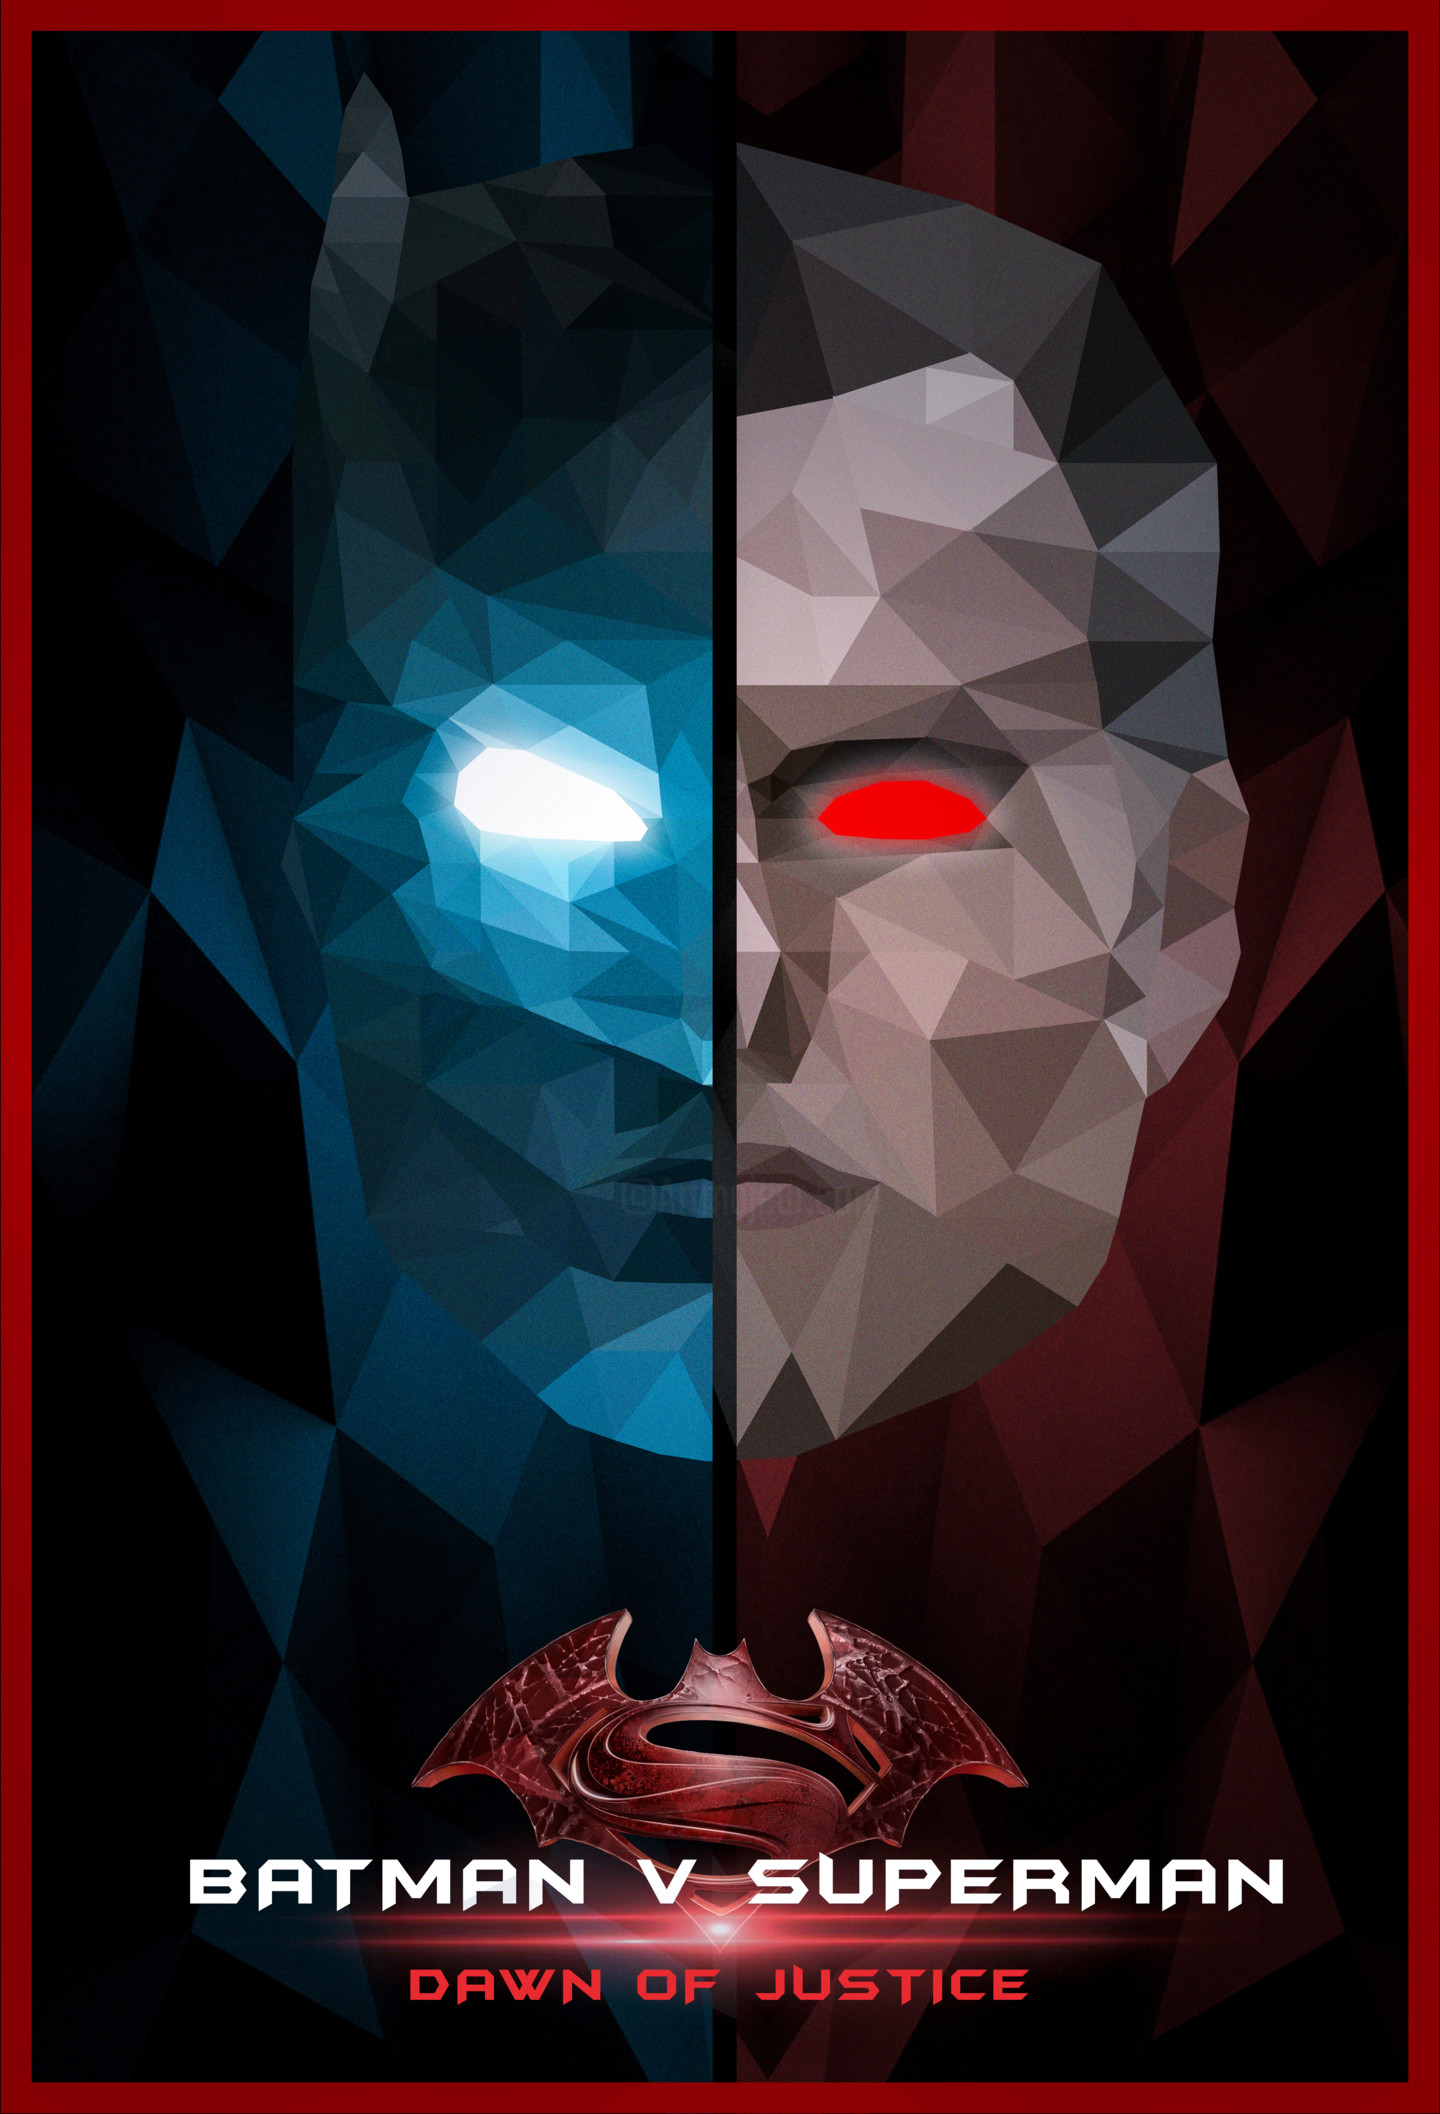 batman-vs-superman-justice-poster.jpg